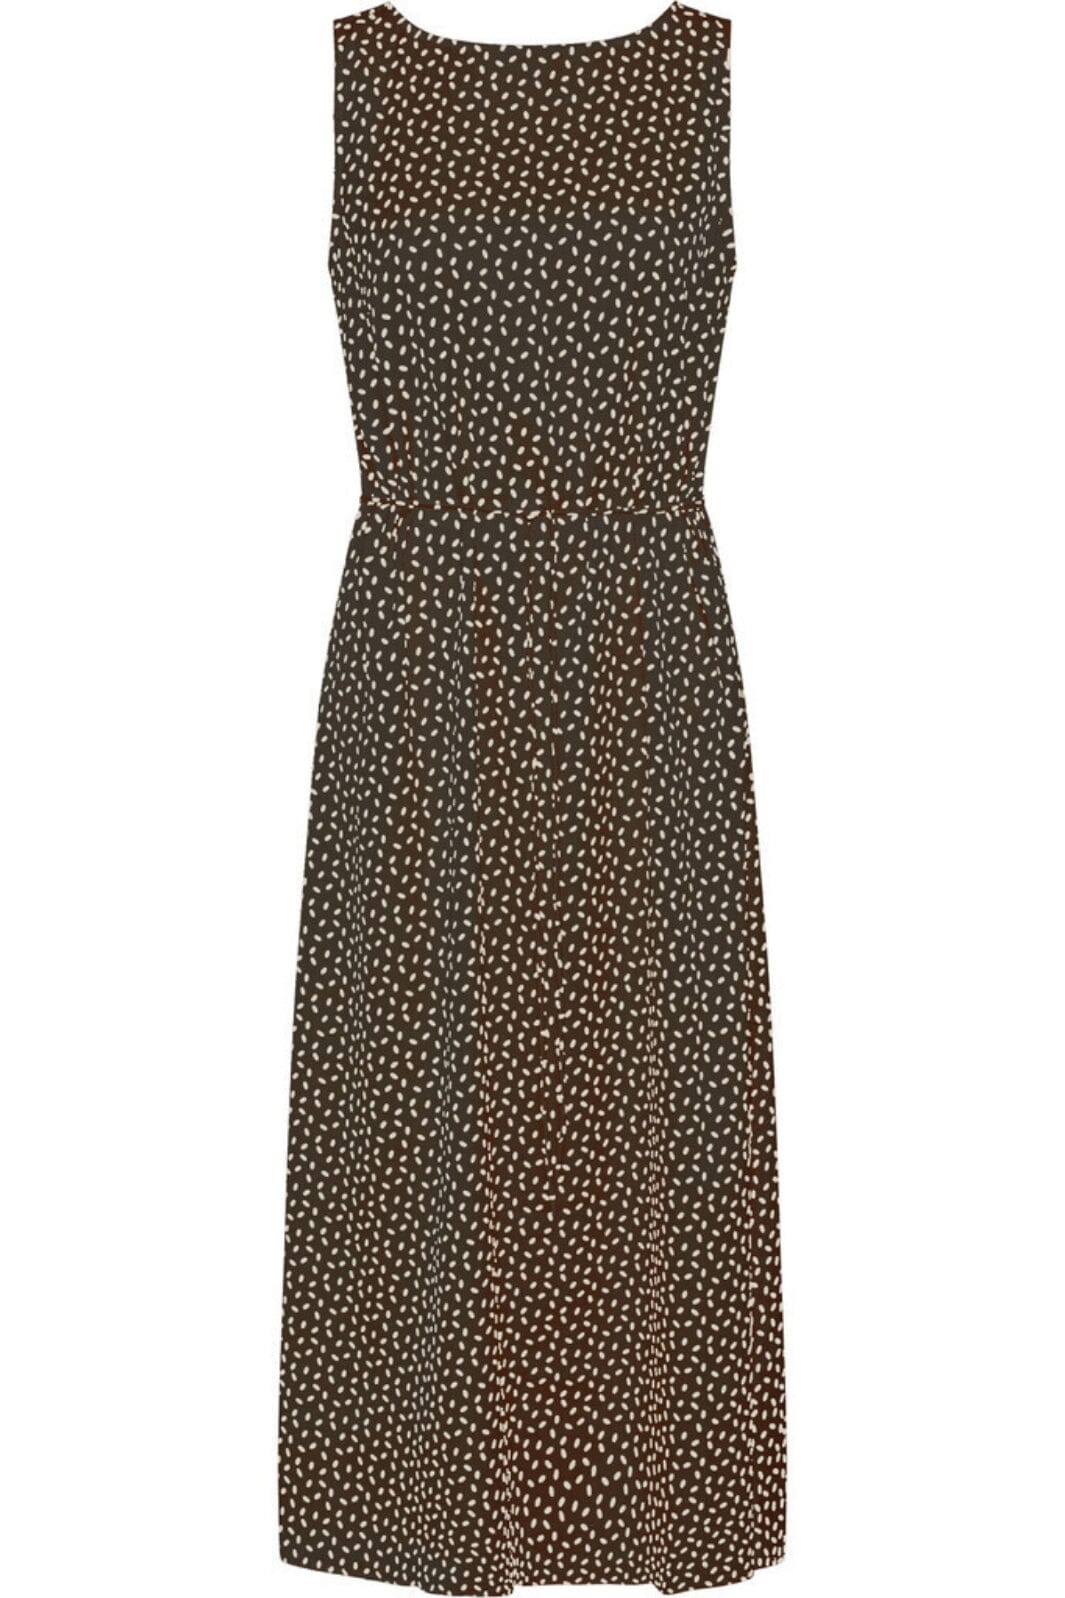 Bruuns Bazaar - AcaciaBBKarola dress - Brown/cream dot print Kjoler 